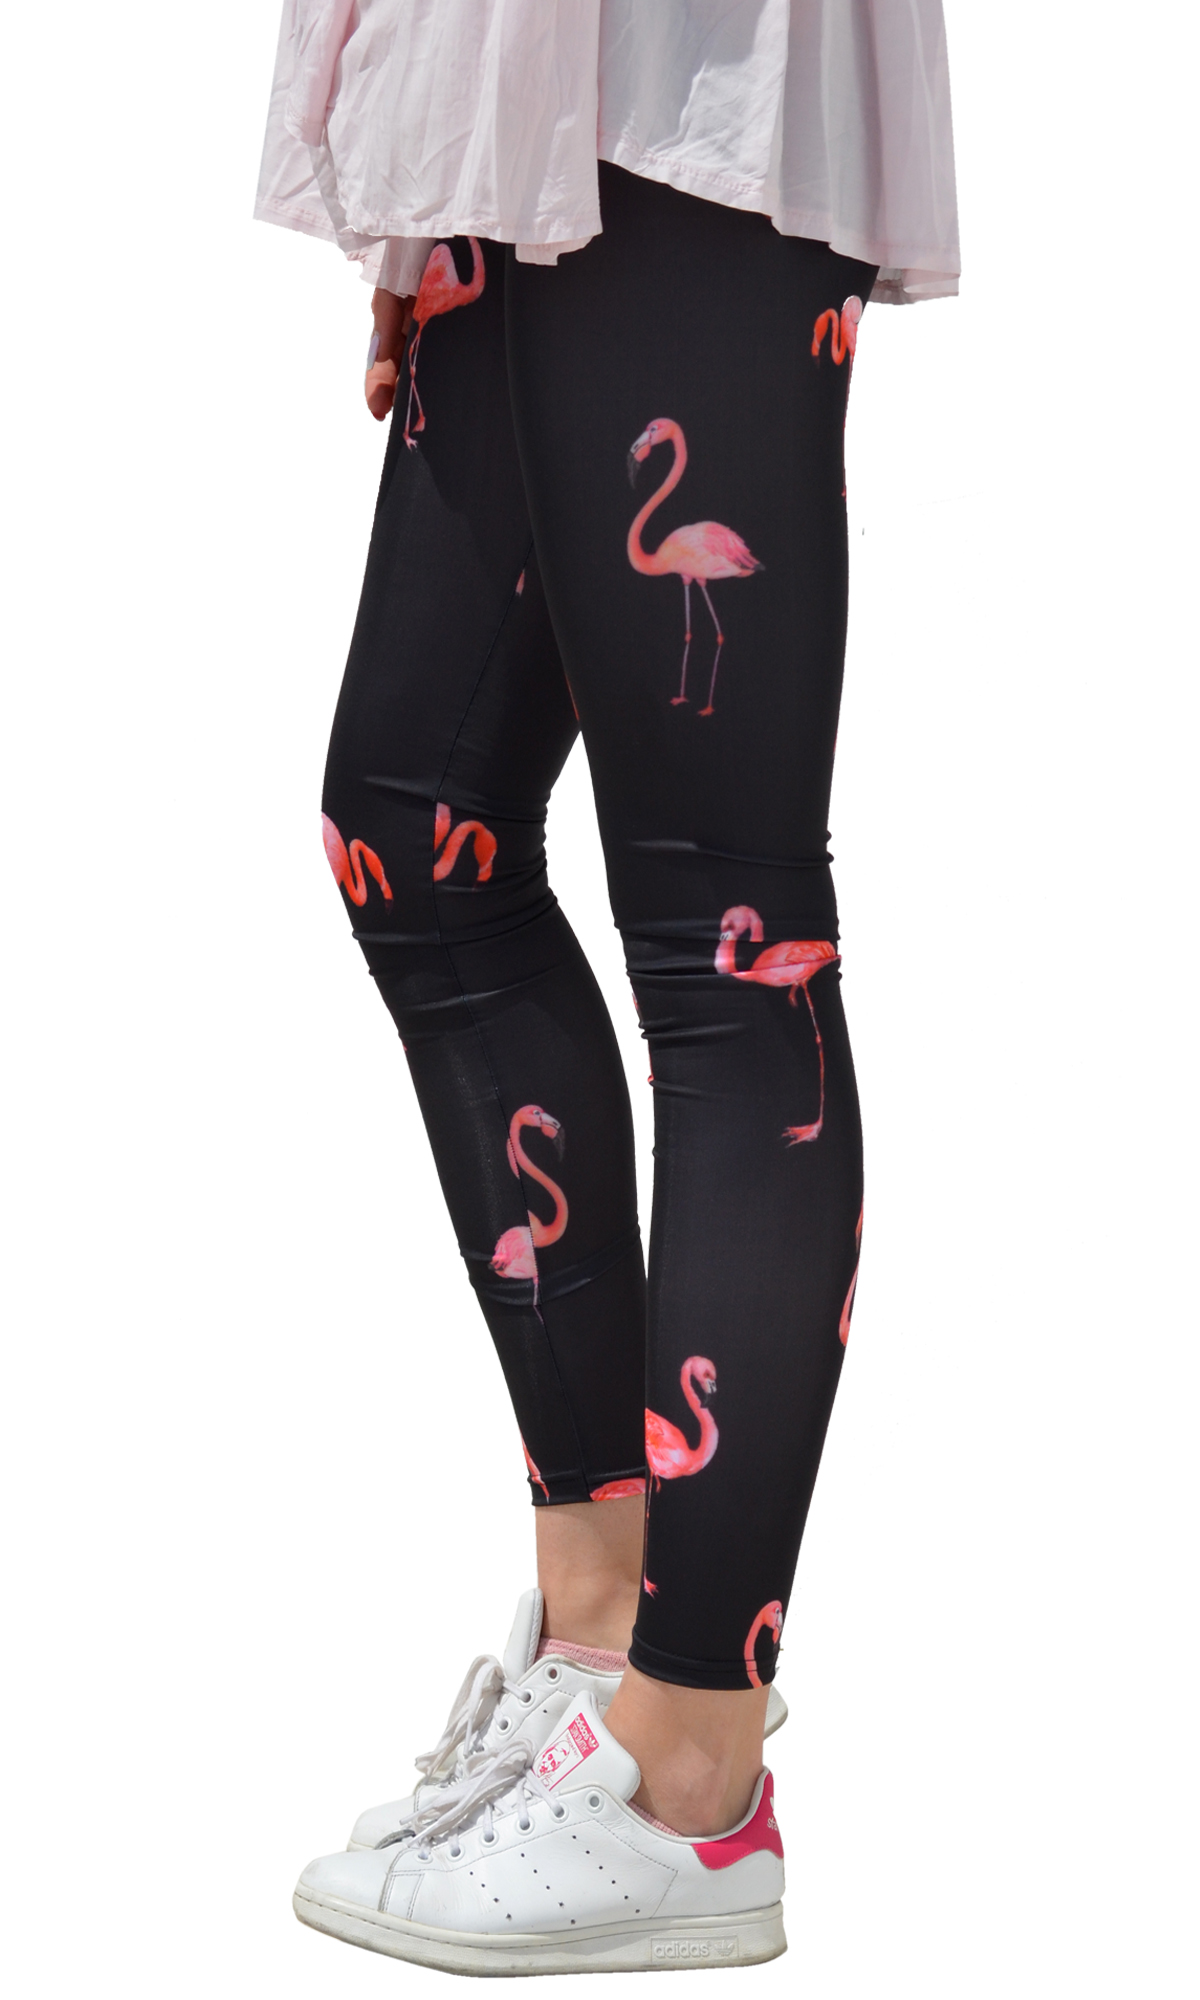 Woman's leggings with flamingo pattern | LEGGINGS - PANTS | missreina.com